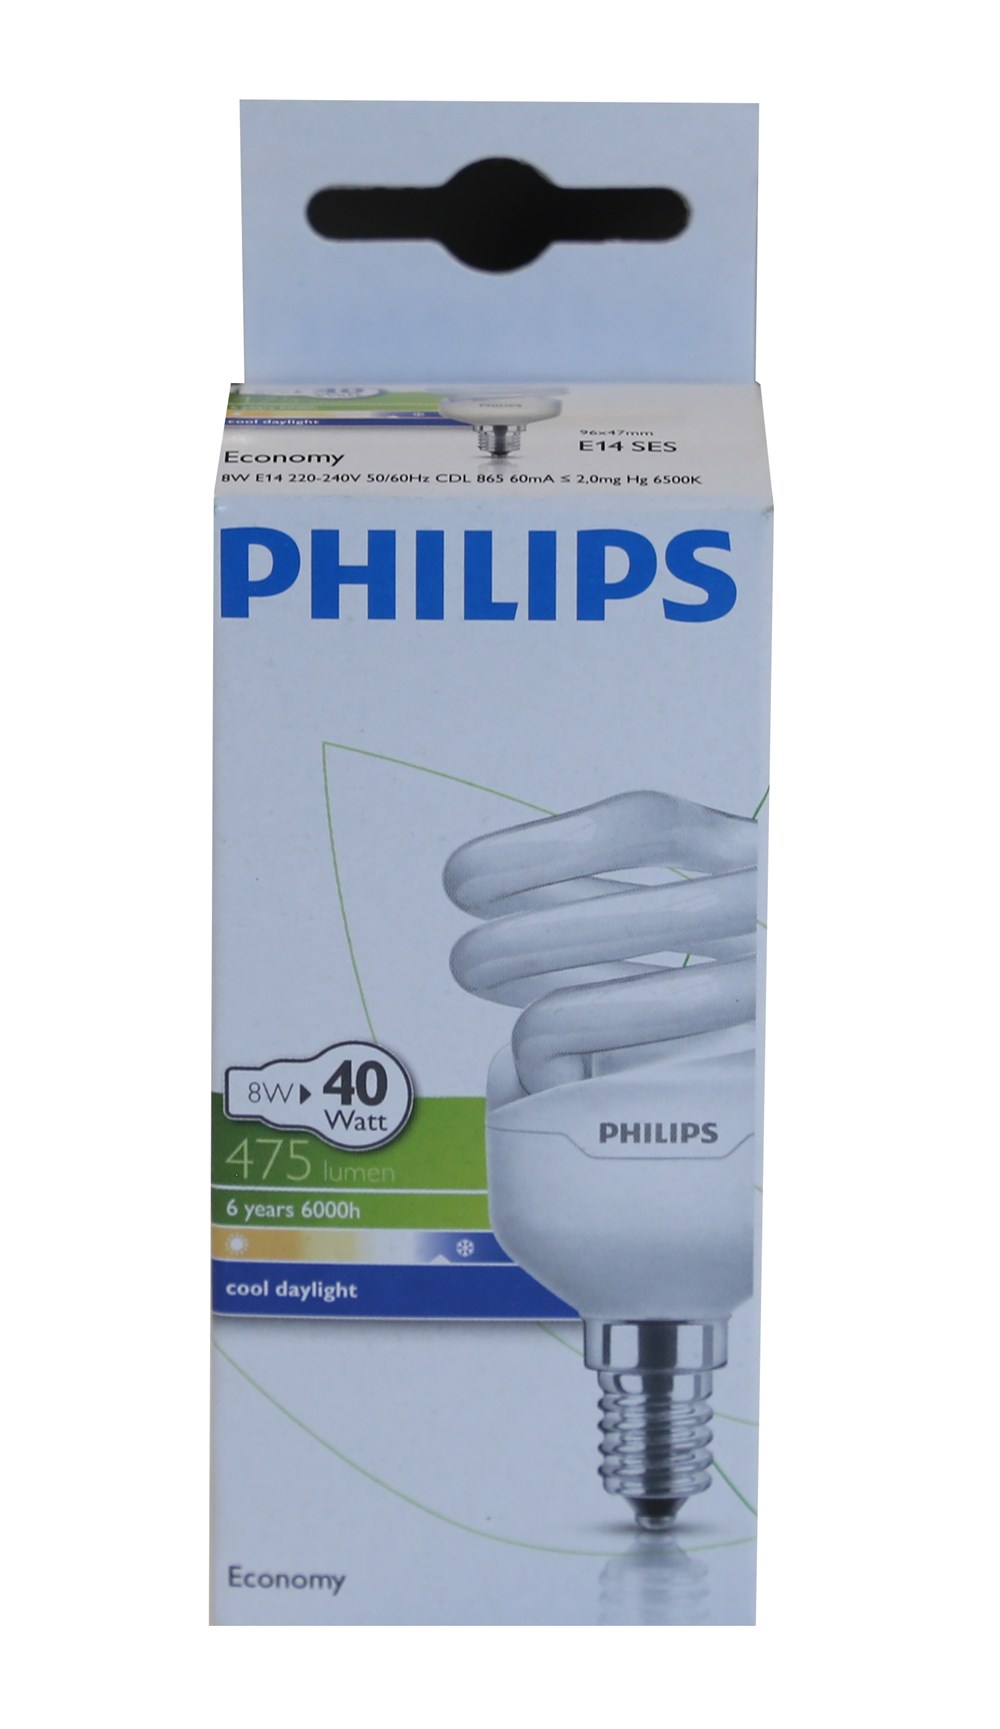 Philips Economy Twister 8w Cdl Beyaz Ampul E14 (406138)/mixofis.com